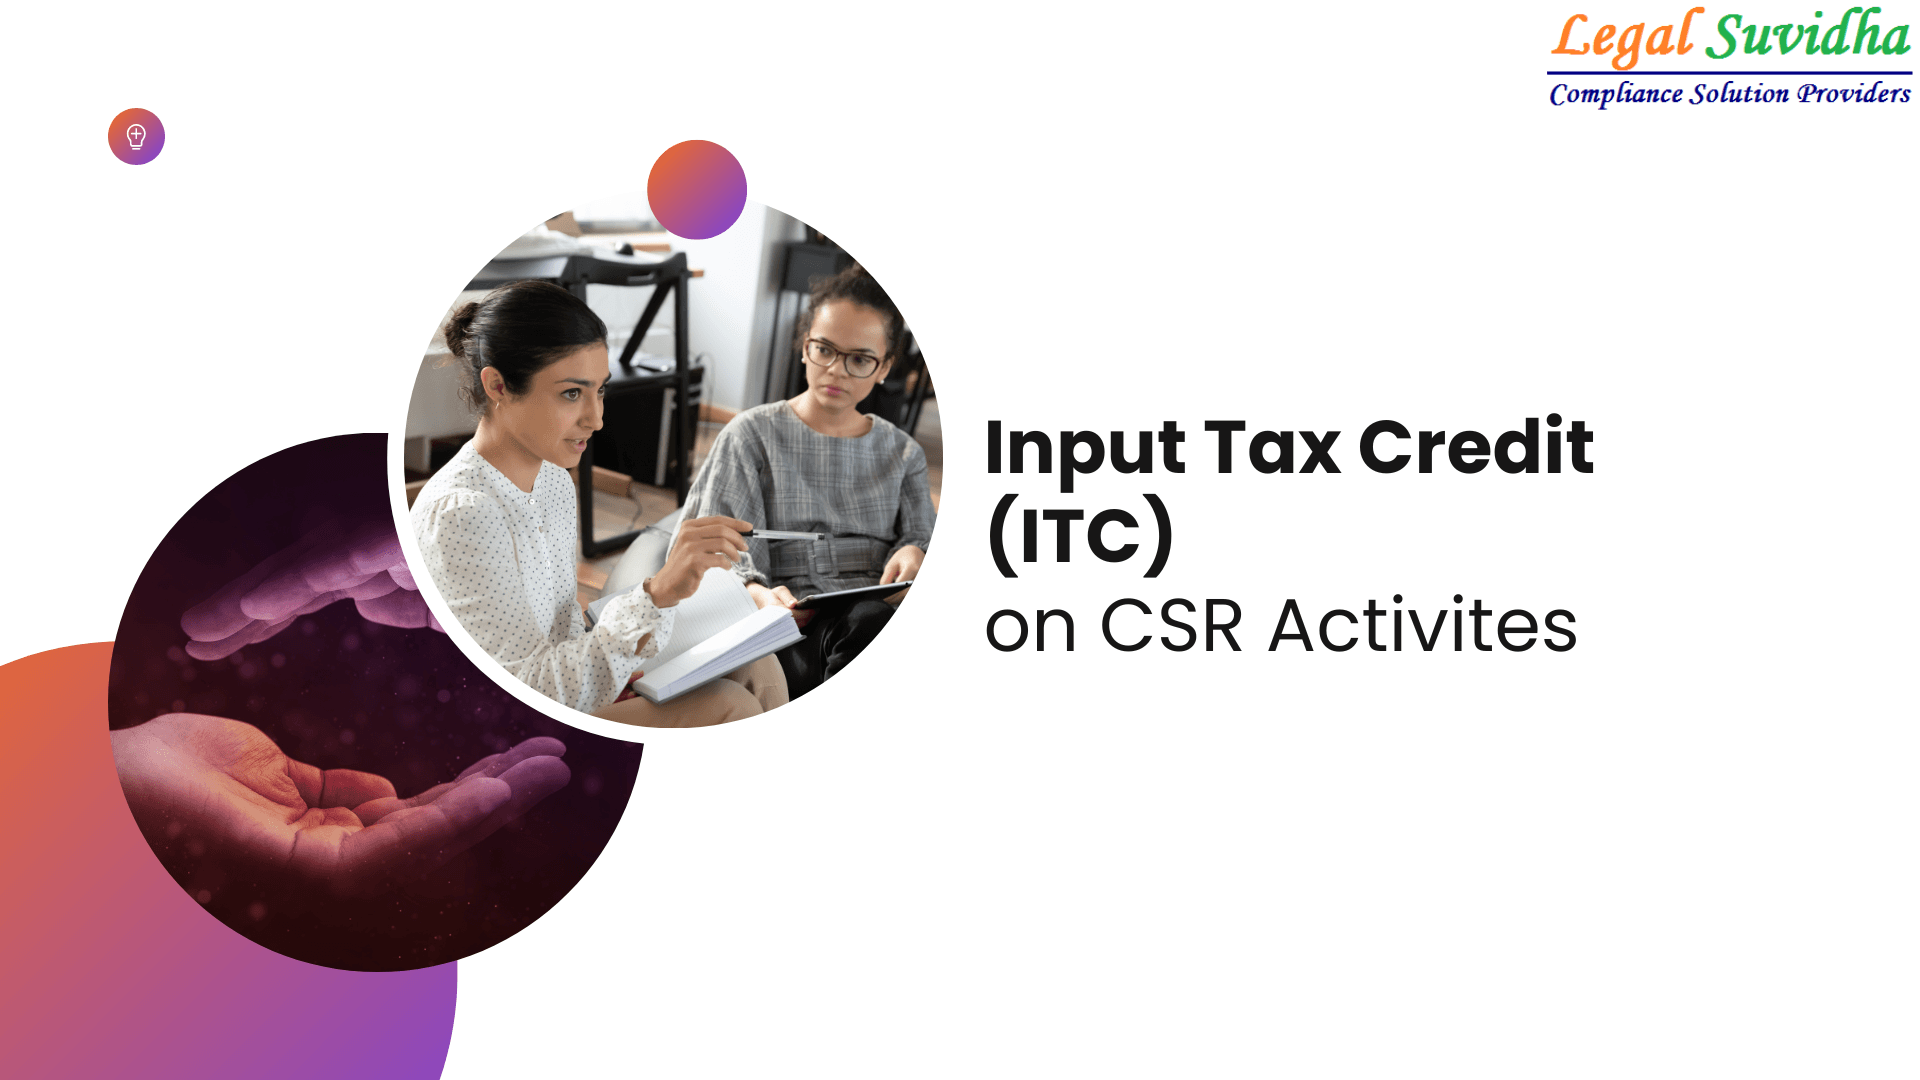 Input Tax Credit (ITC) on CSR Activities under GST